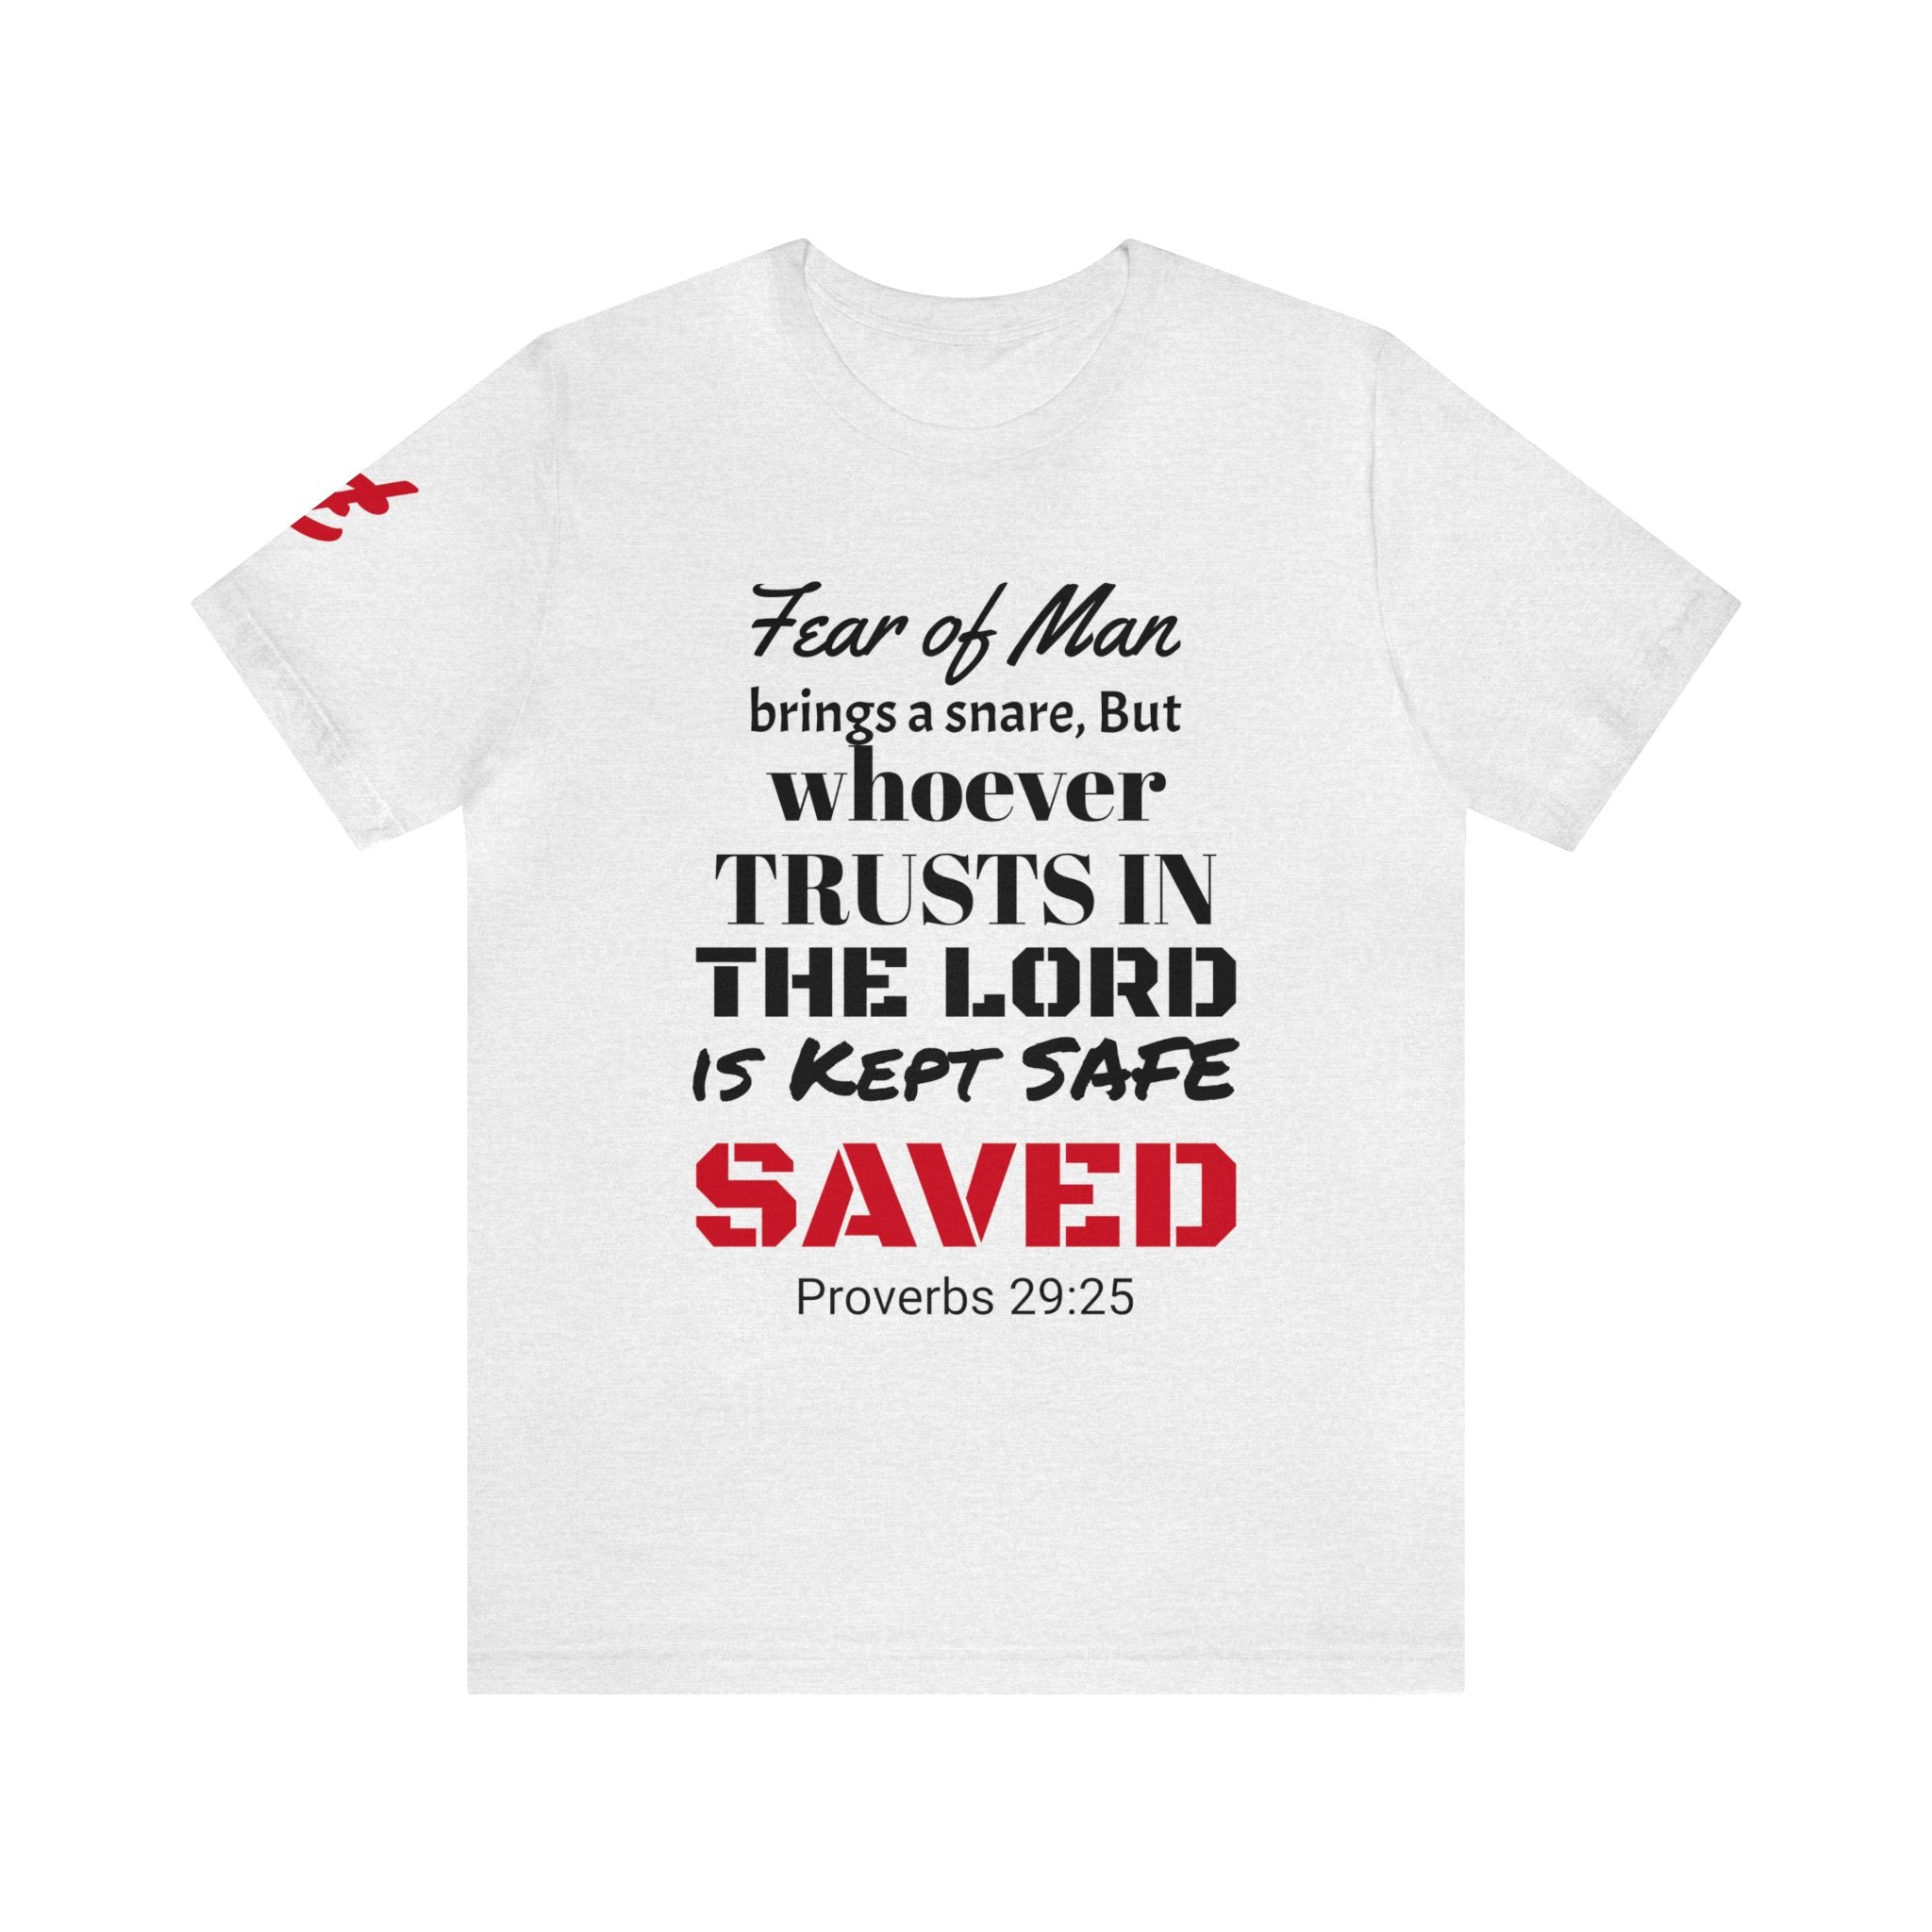 #SavedAndSalty #Scripture #Proverbs 29:25 #2Timothy1:7 #Unisex #Jersey #ShortSleeve #Tee